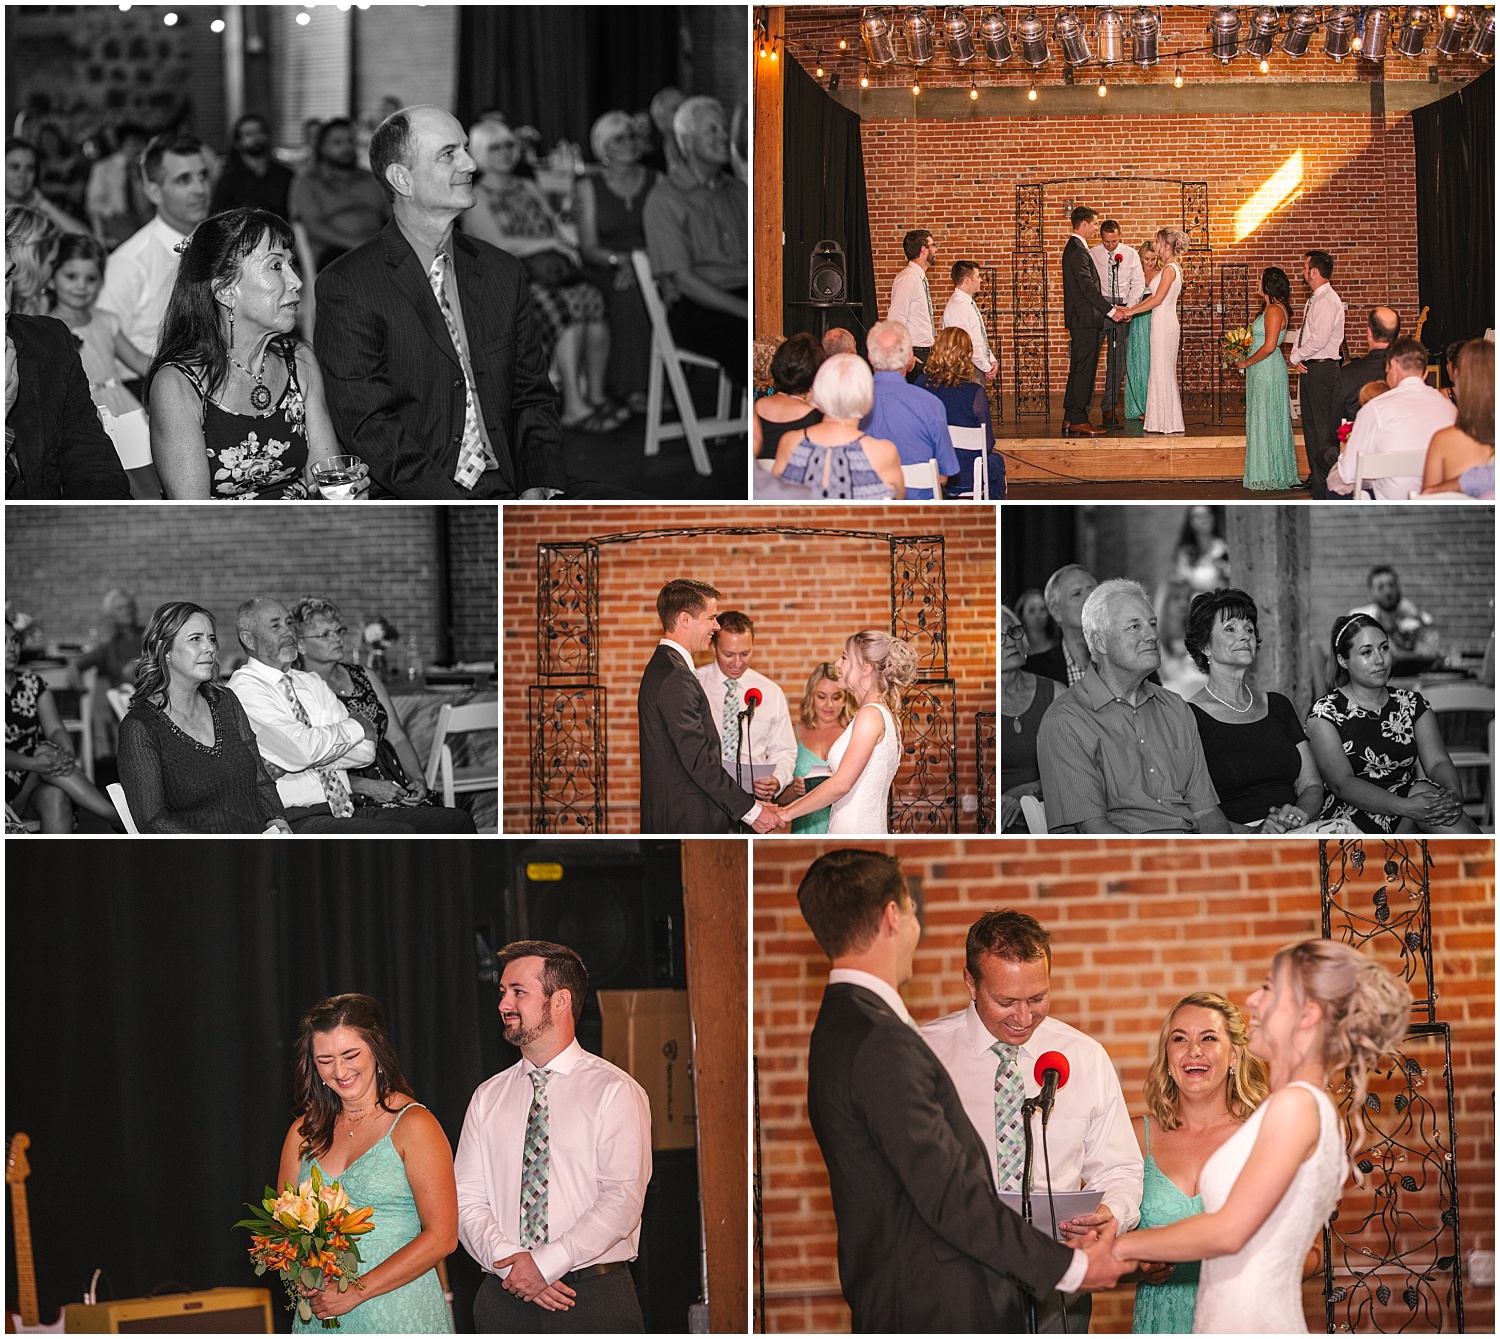 Twin Falls Idaho wedding ceremony at 360 Main Event Center brickhouse